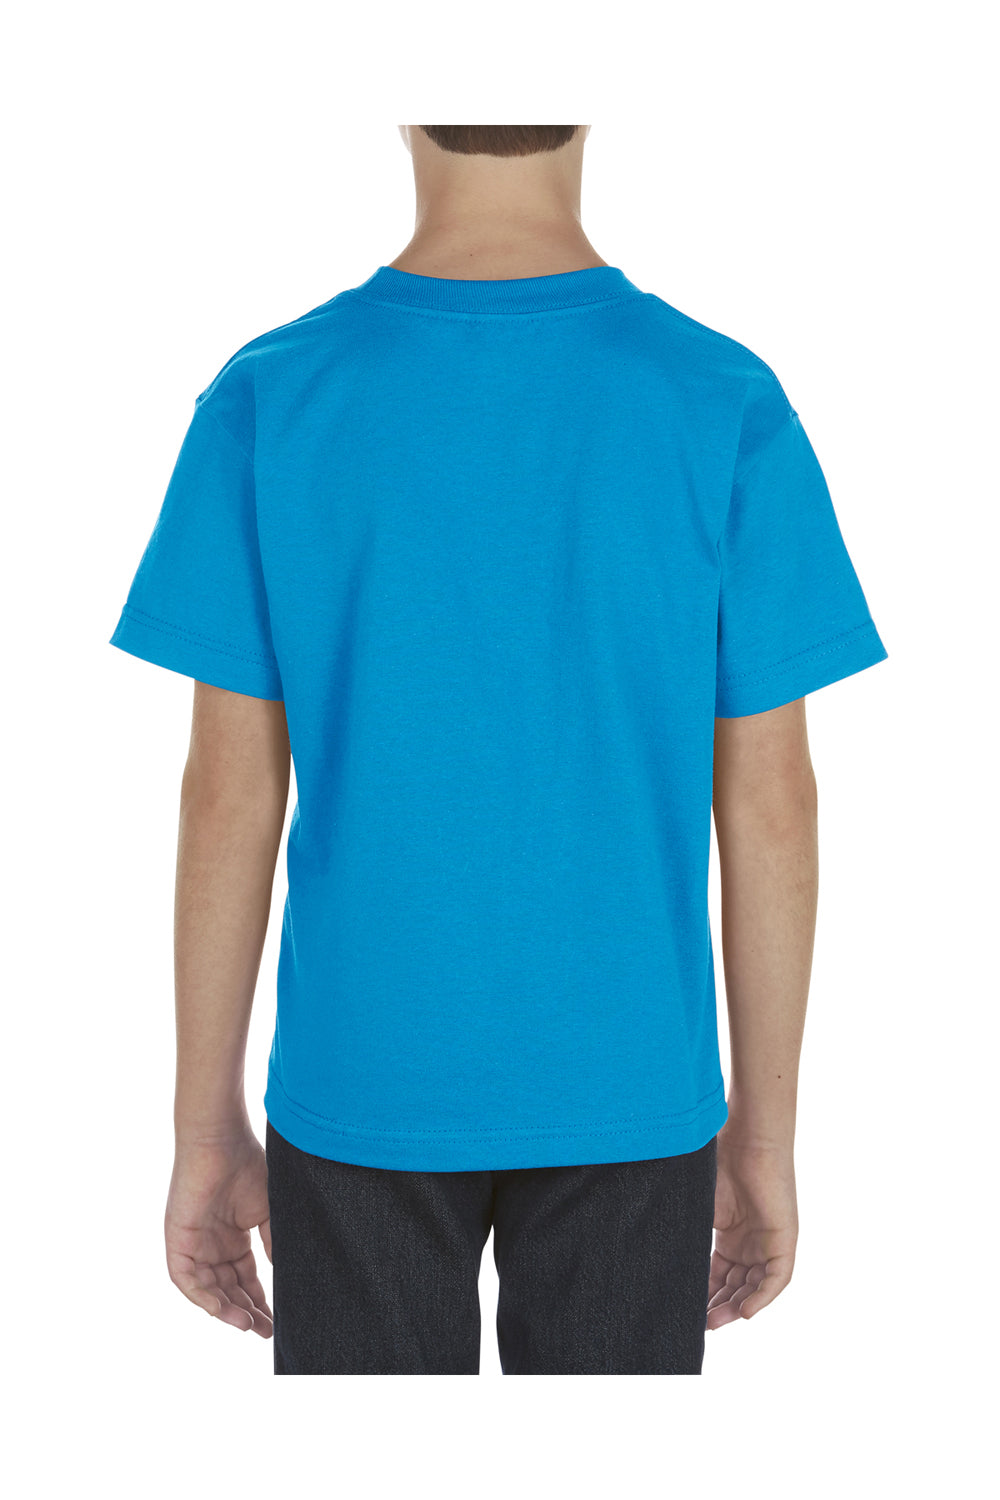 Alstyle AL3381 Youth Short Sleeve Crewneck T-Shirt Turquoise Blue Back